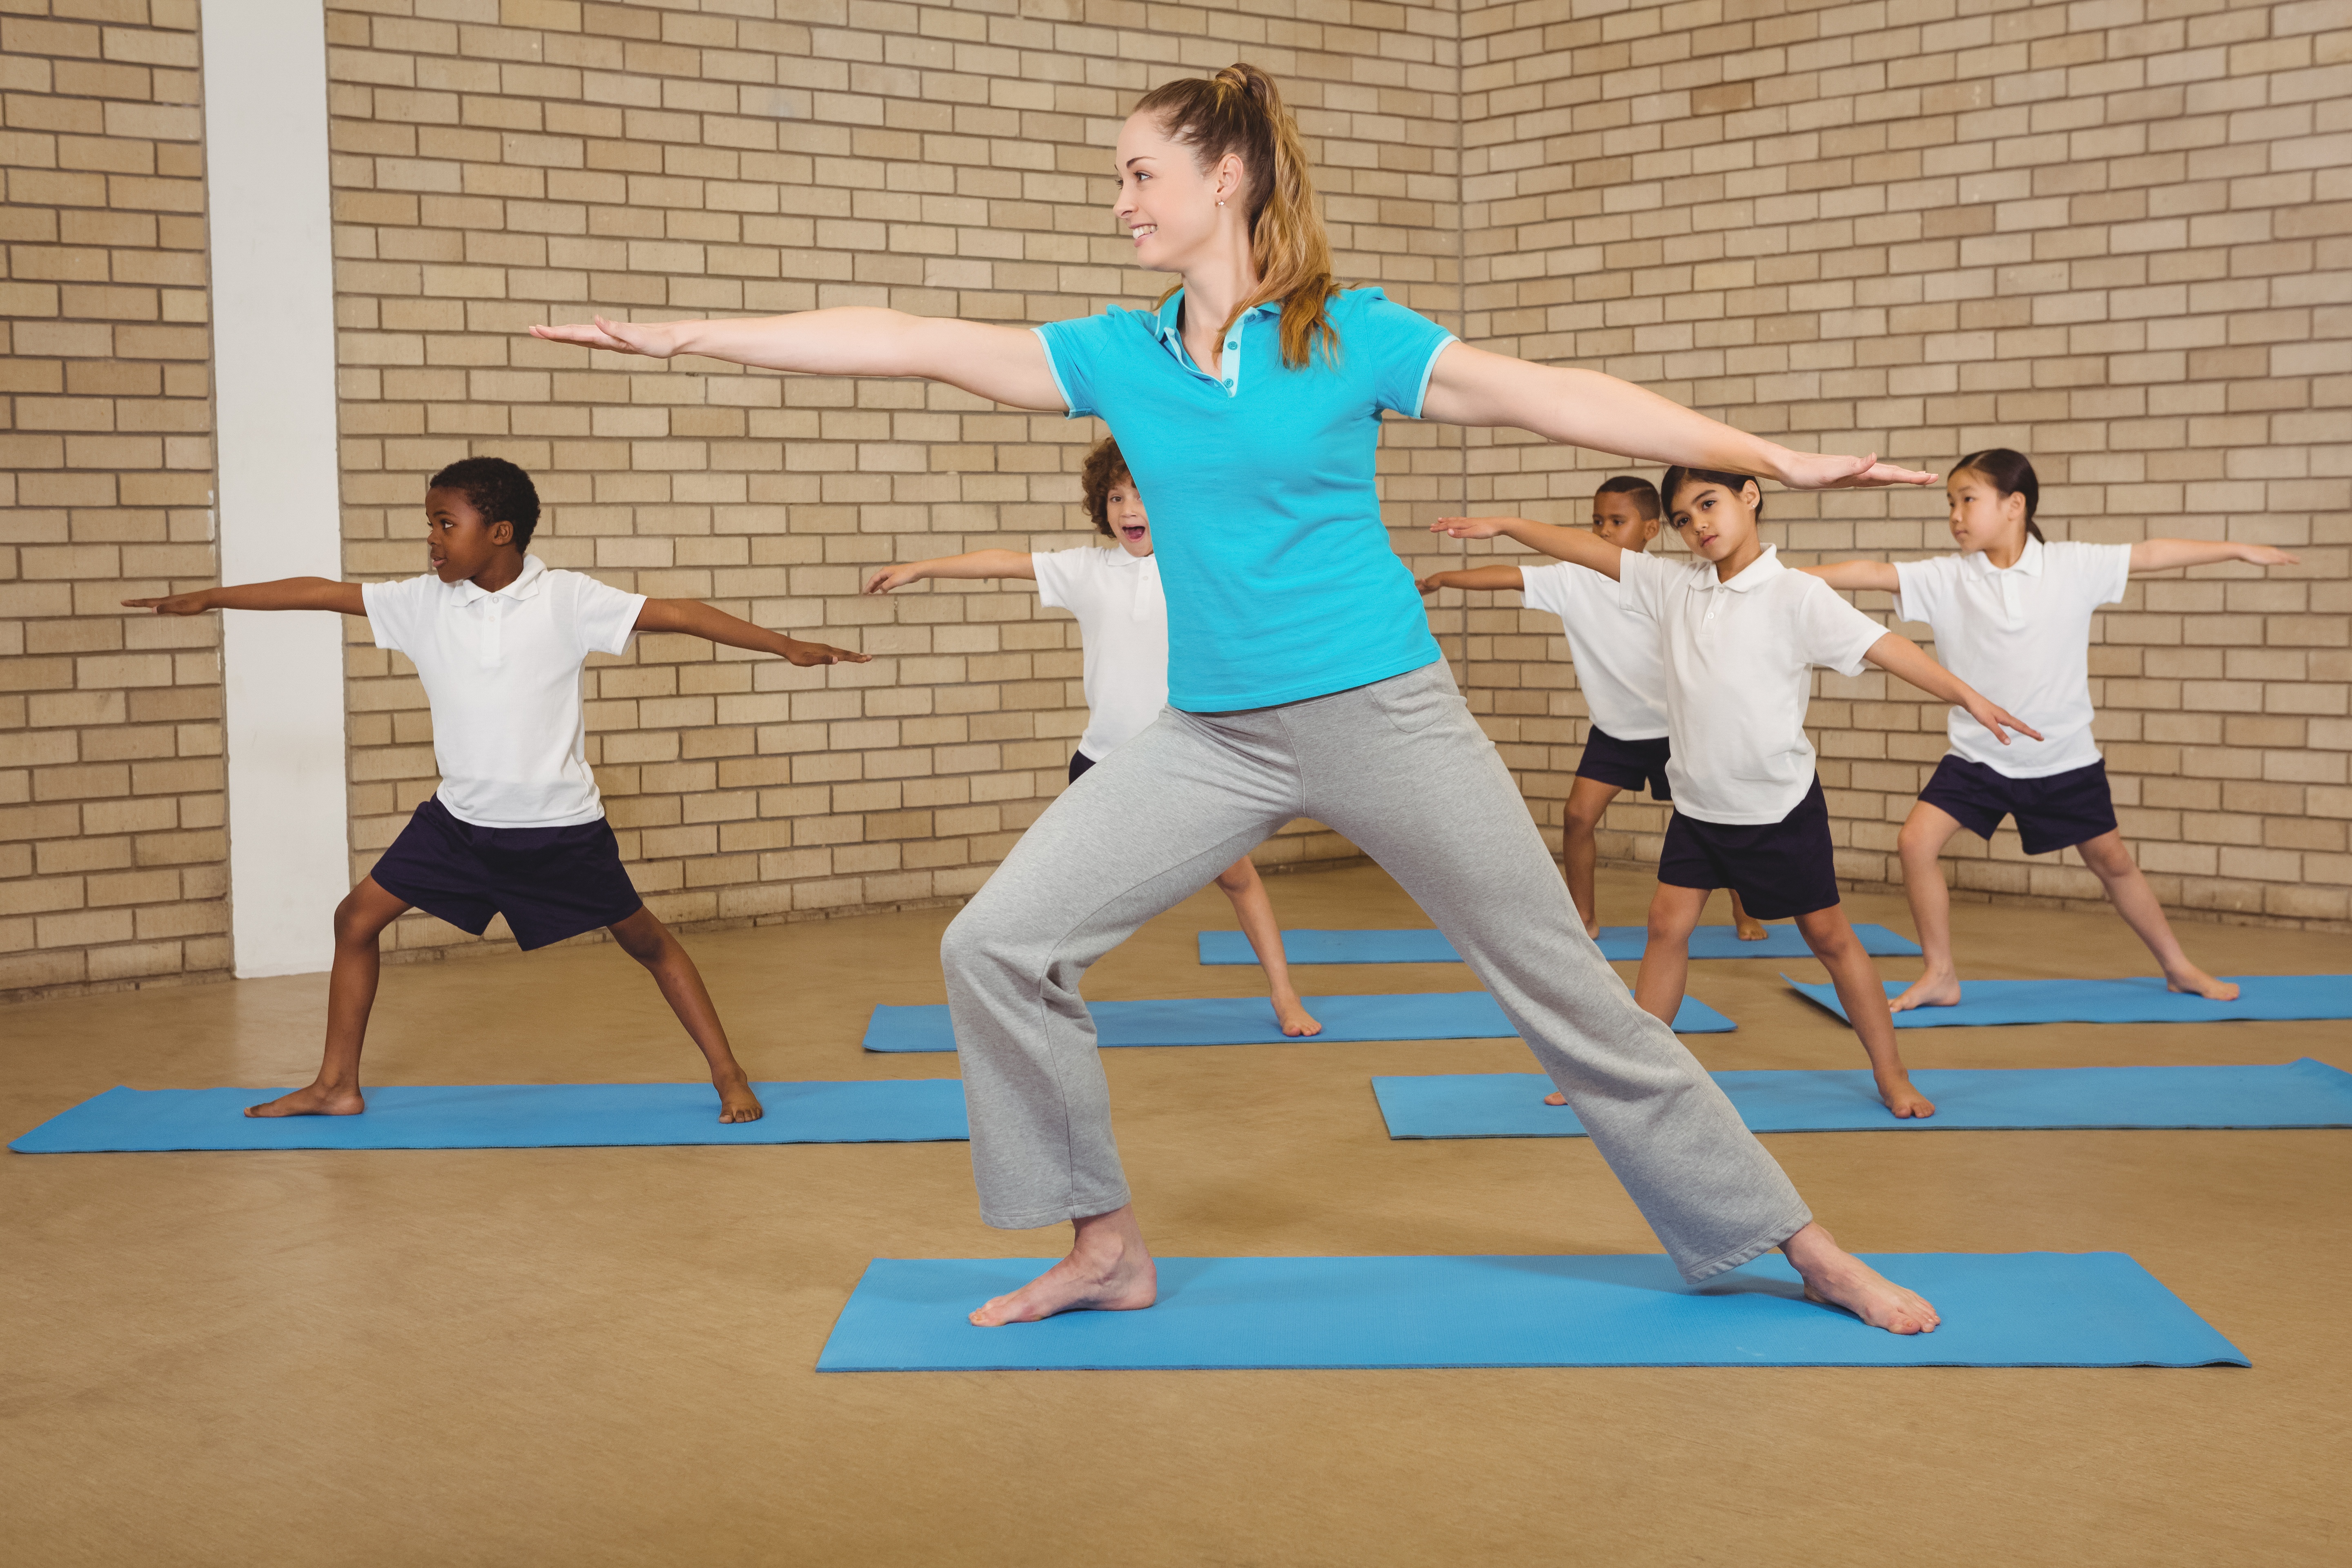 Students and teacher doing yoga pose